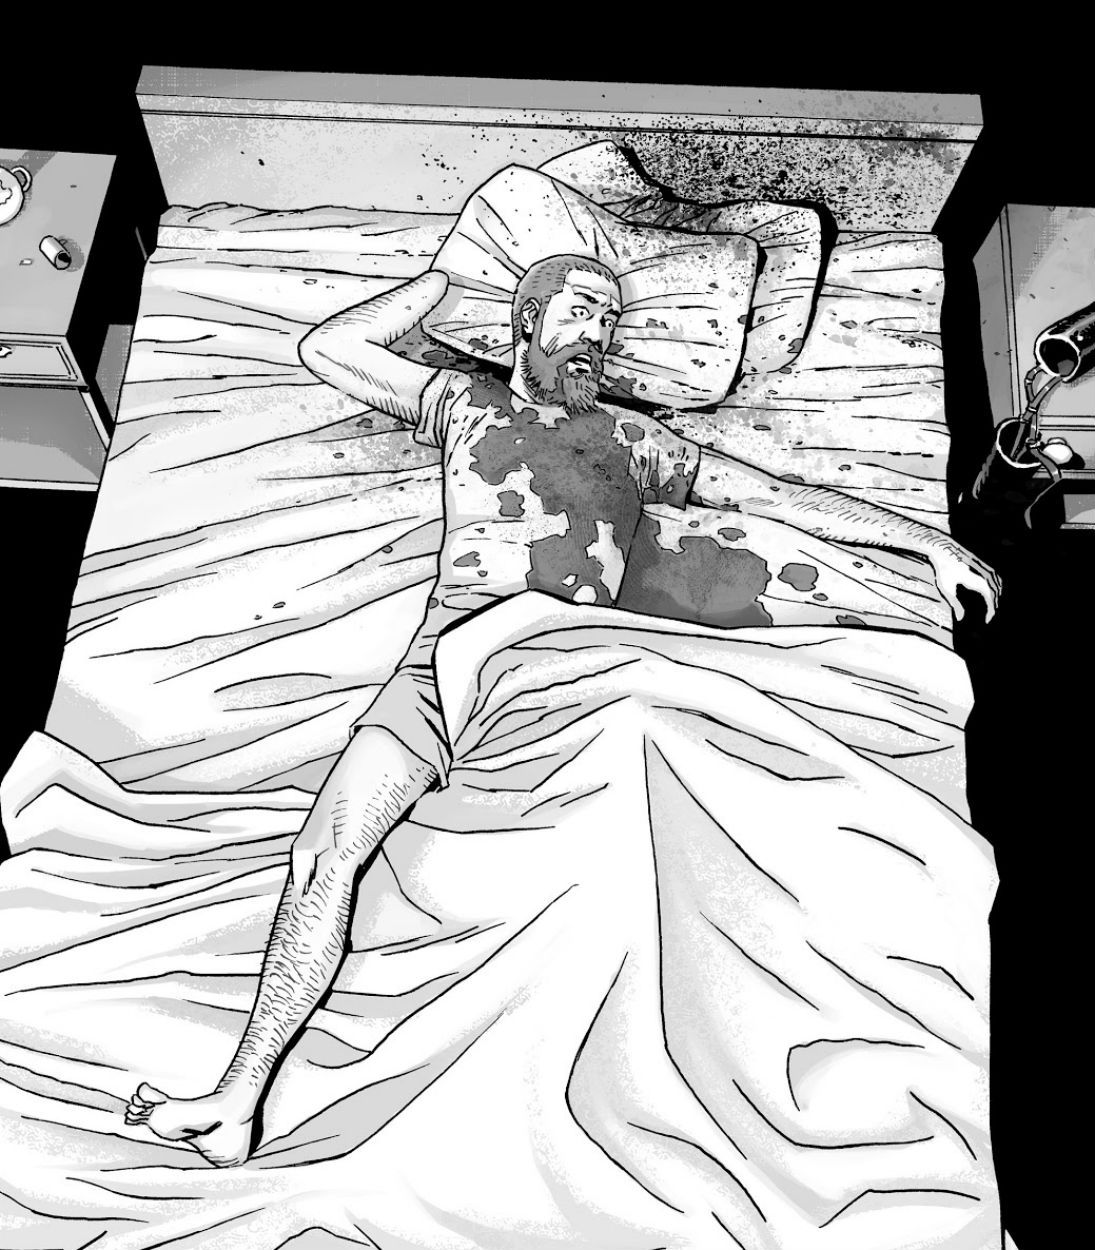 Ricks death in The Walking Dead comics